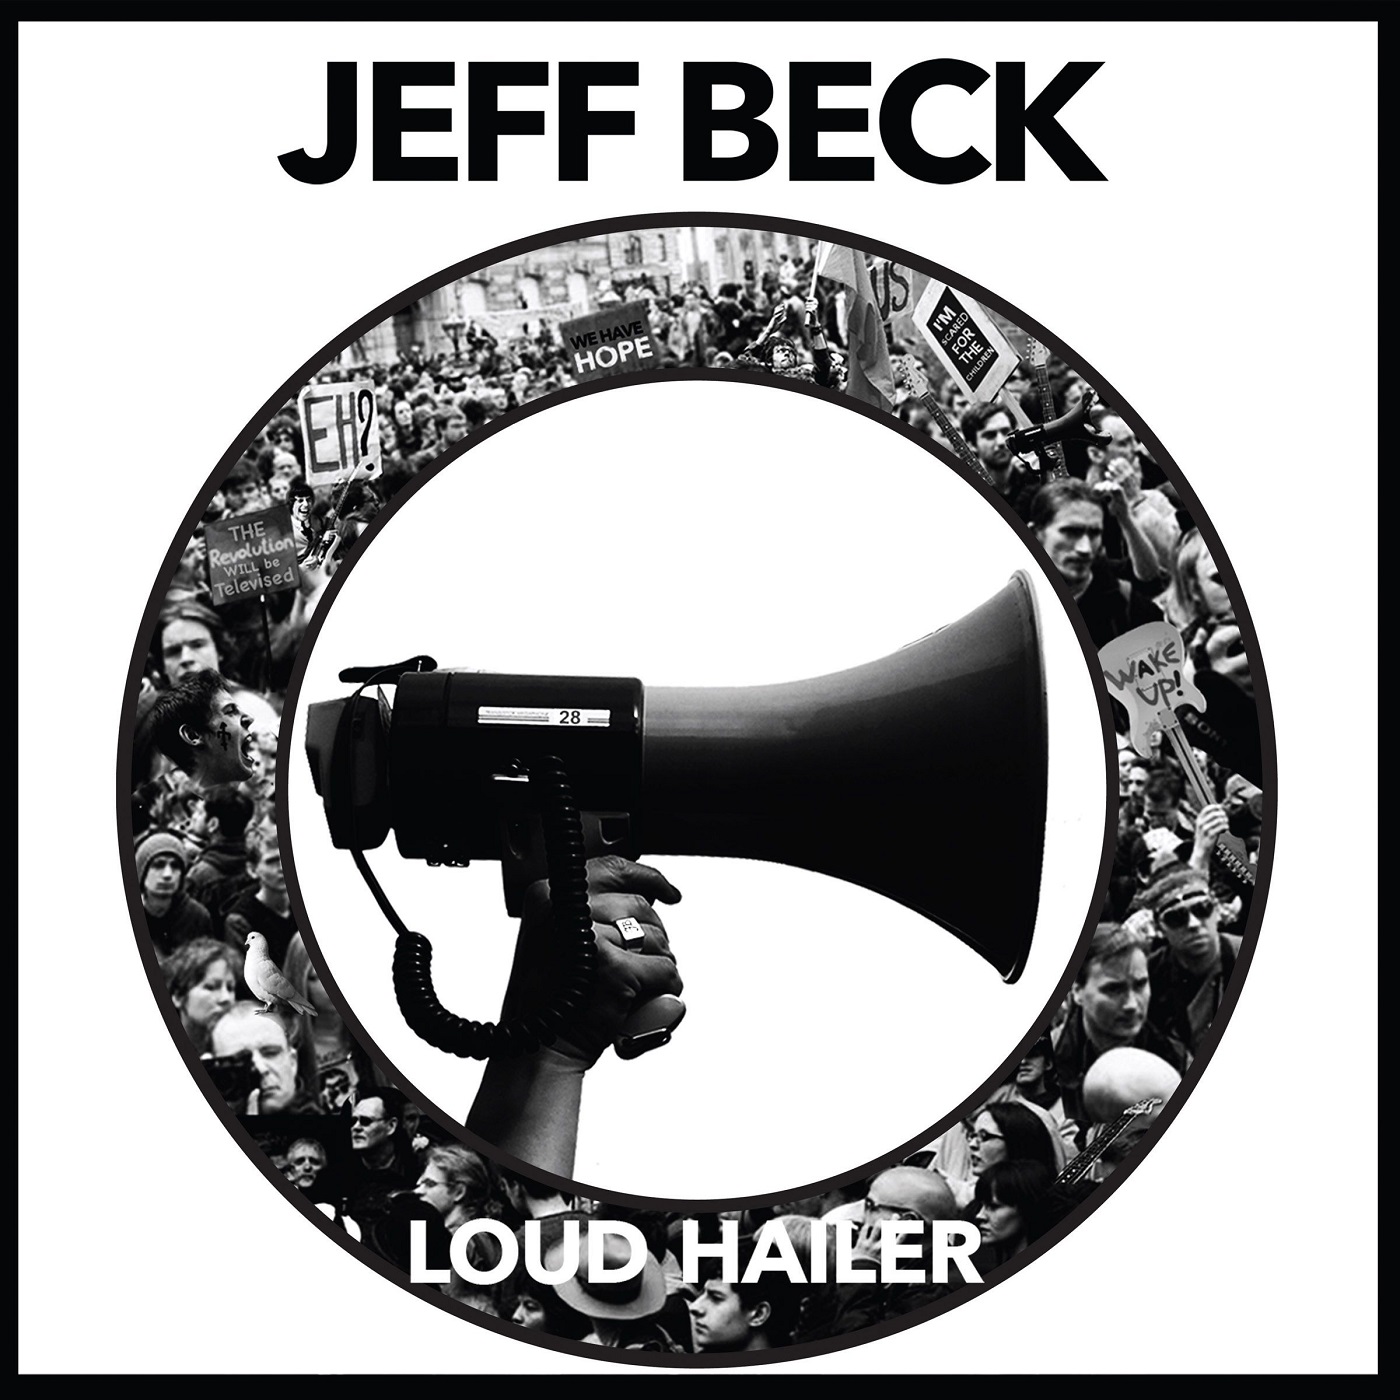 Jeff Beck’s “Loud Hailer”